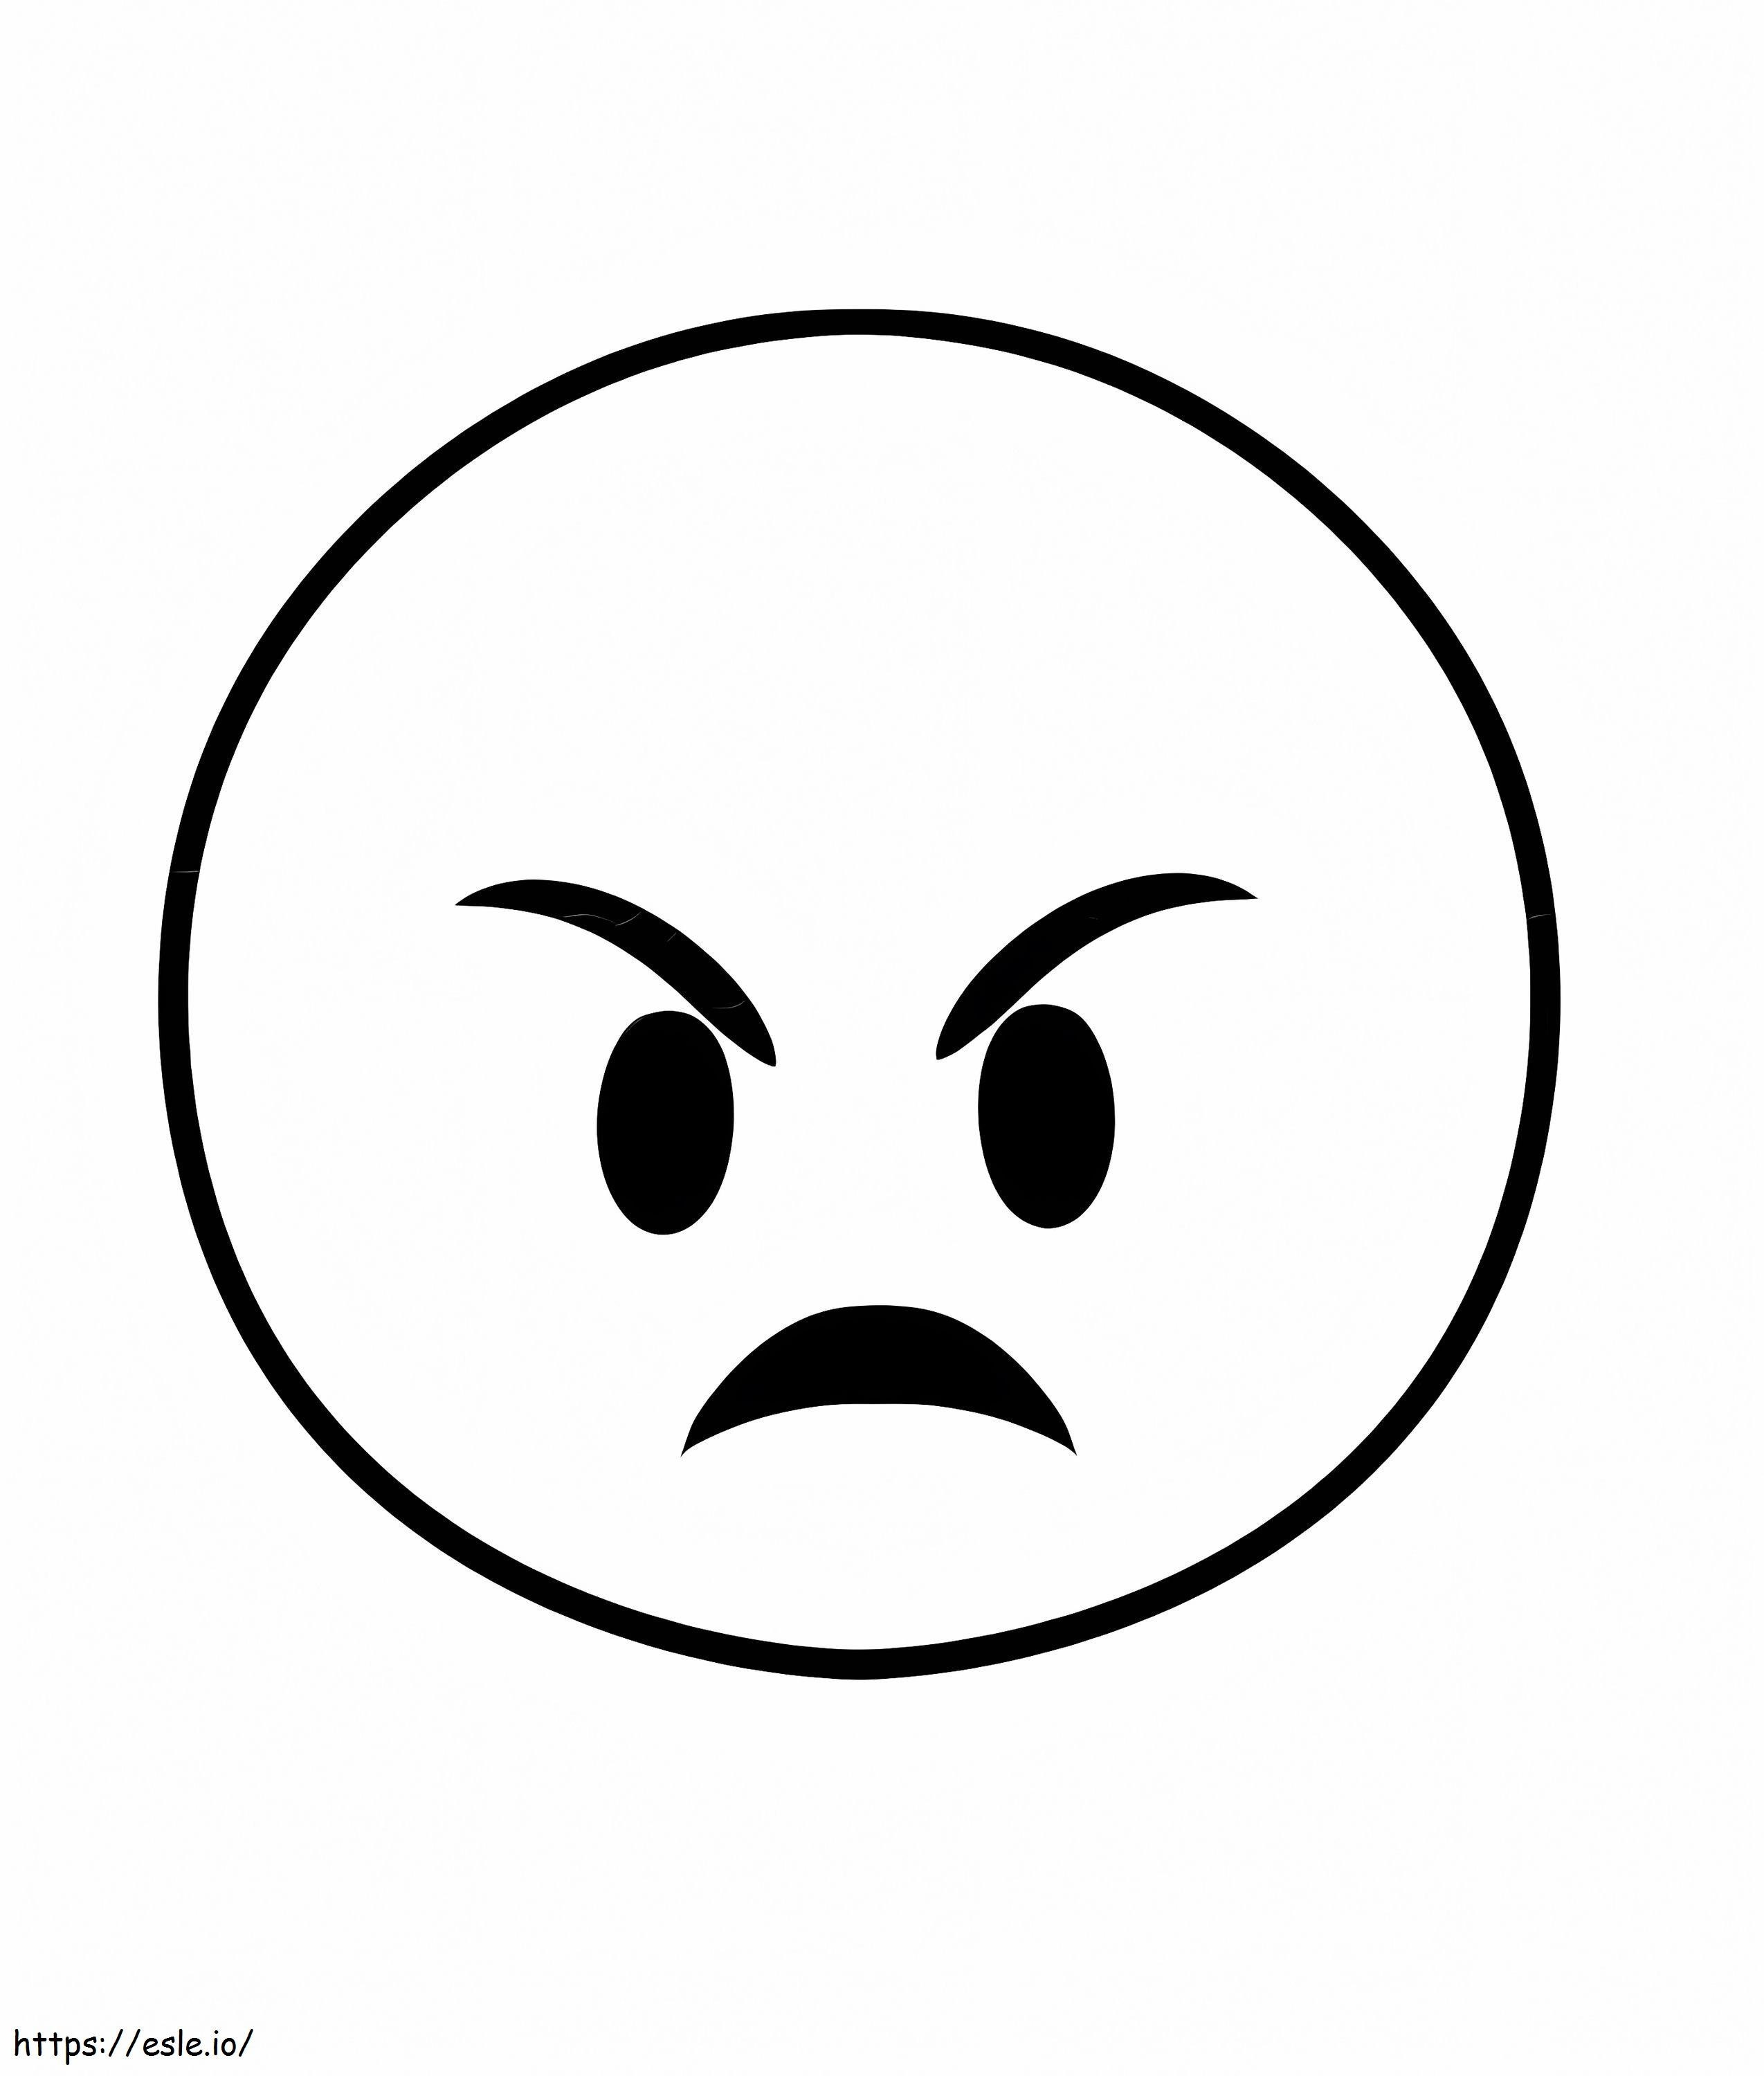 Angry Emoji coloring page